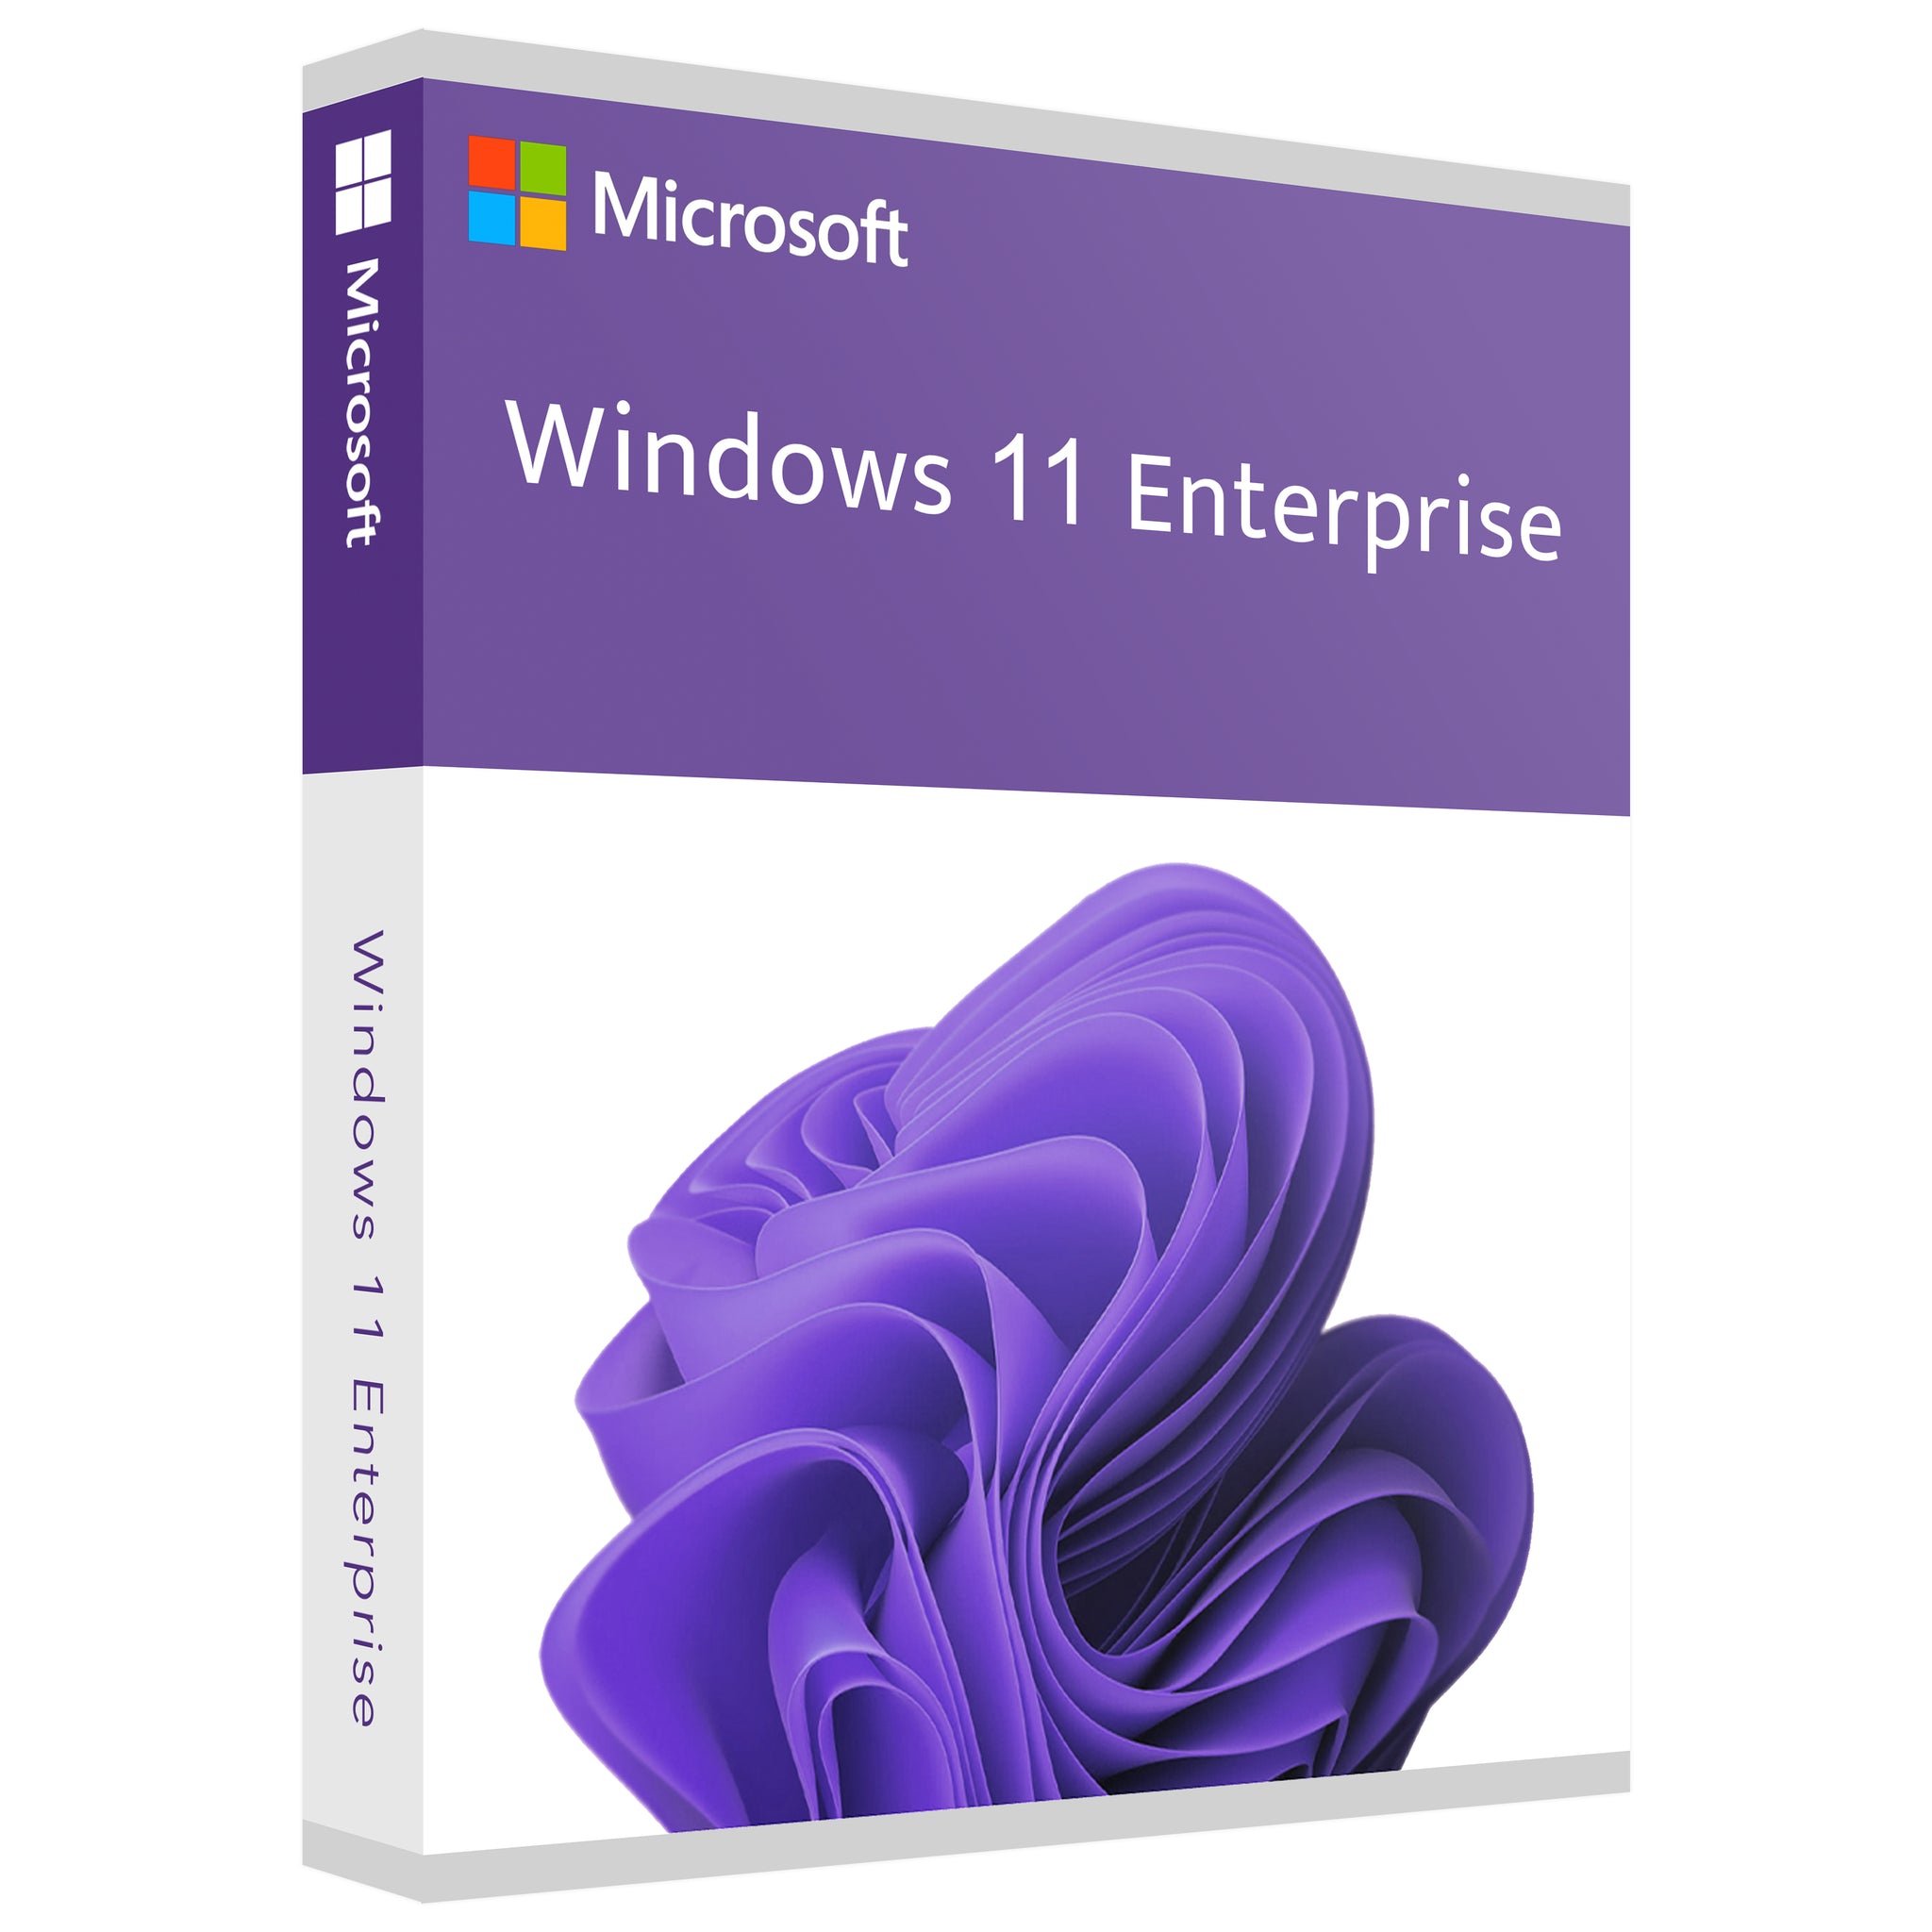 Microsoft Windows 11 Enterprise - Lifetime License Key for 1 PC